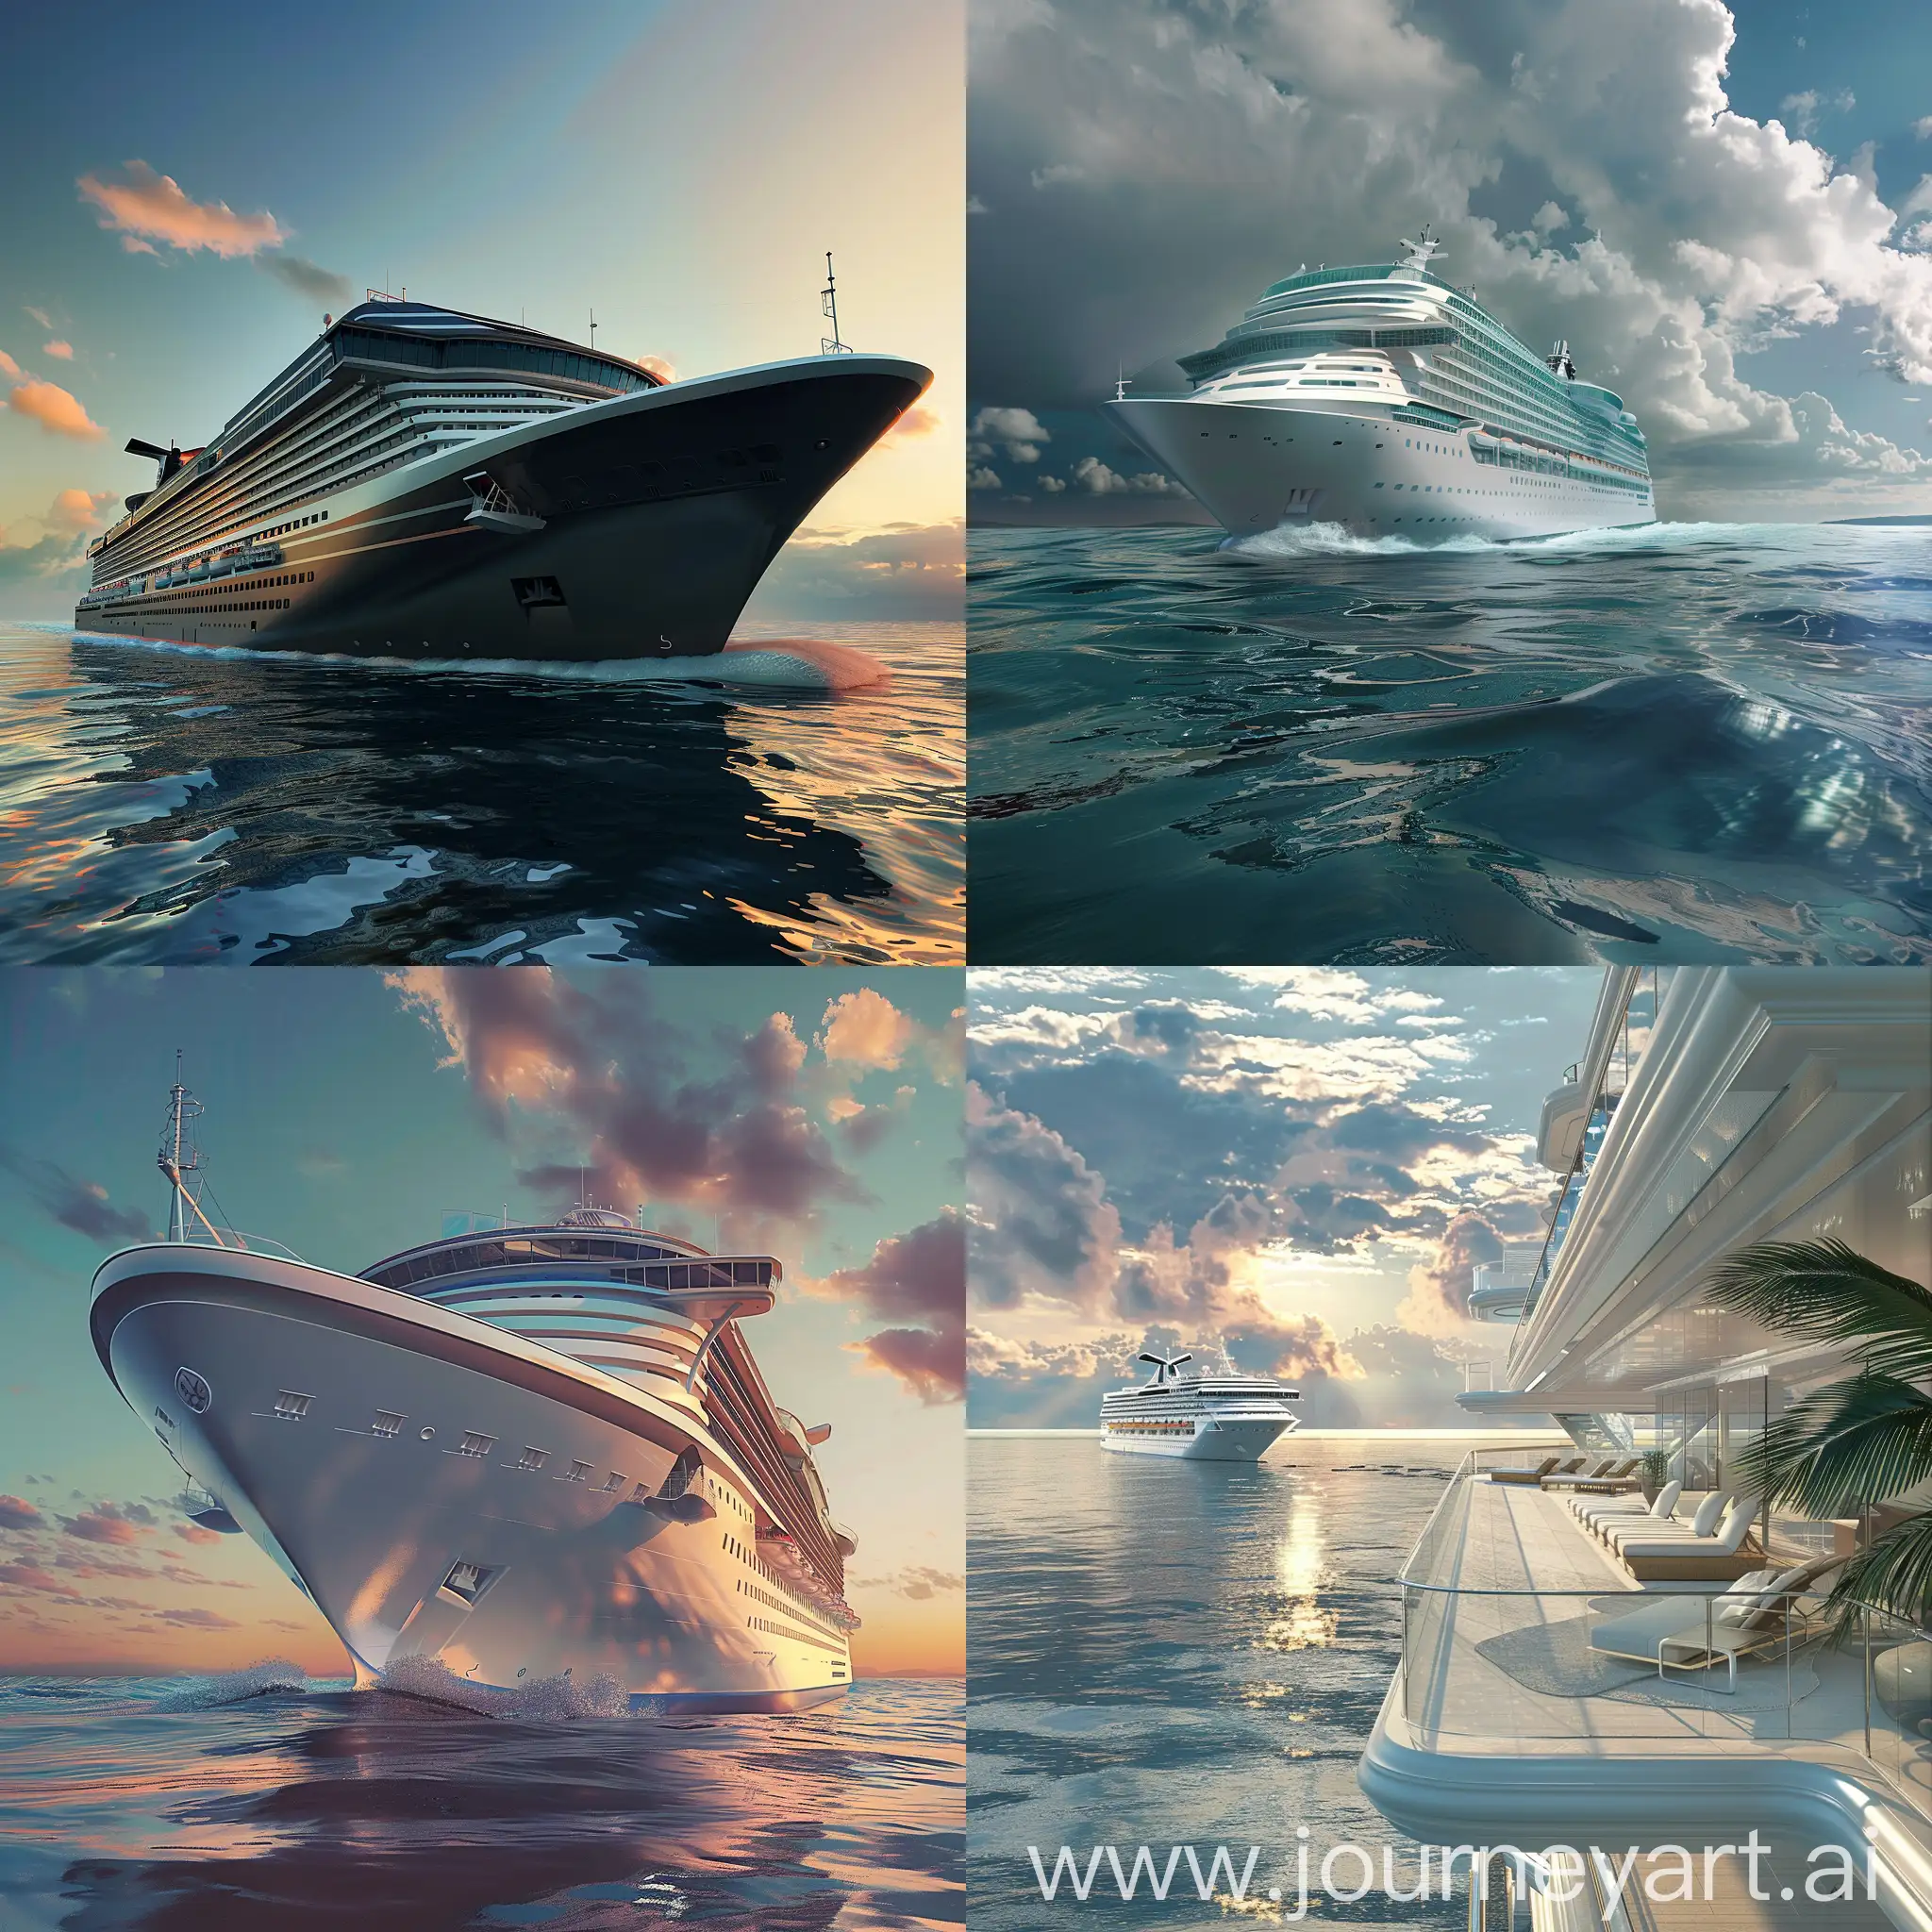 luxury image at sea with cruise ship, photorealistic